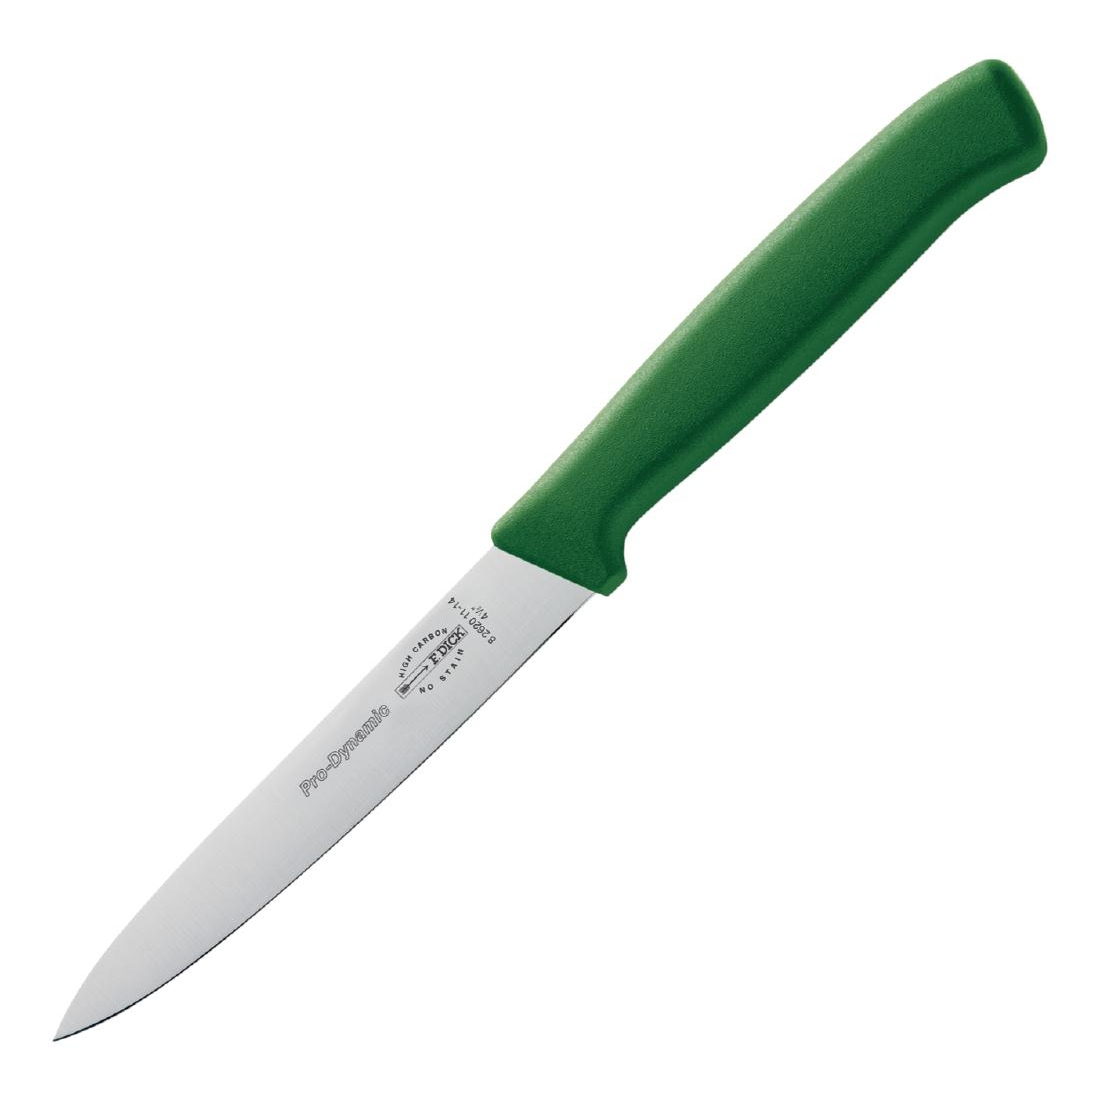 Dick Pro Dynamic Kitchen Knife Green 11cm